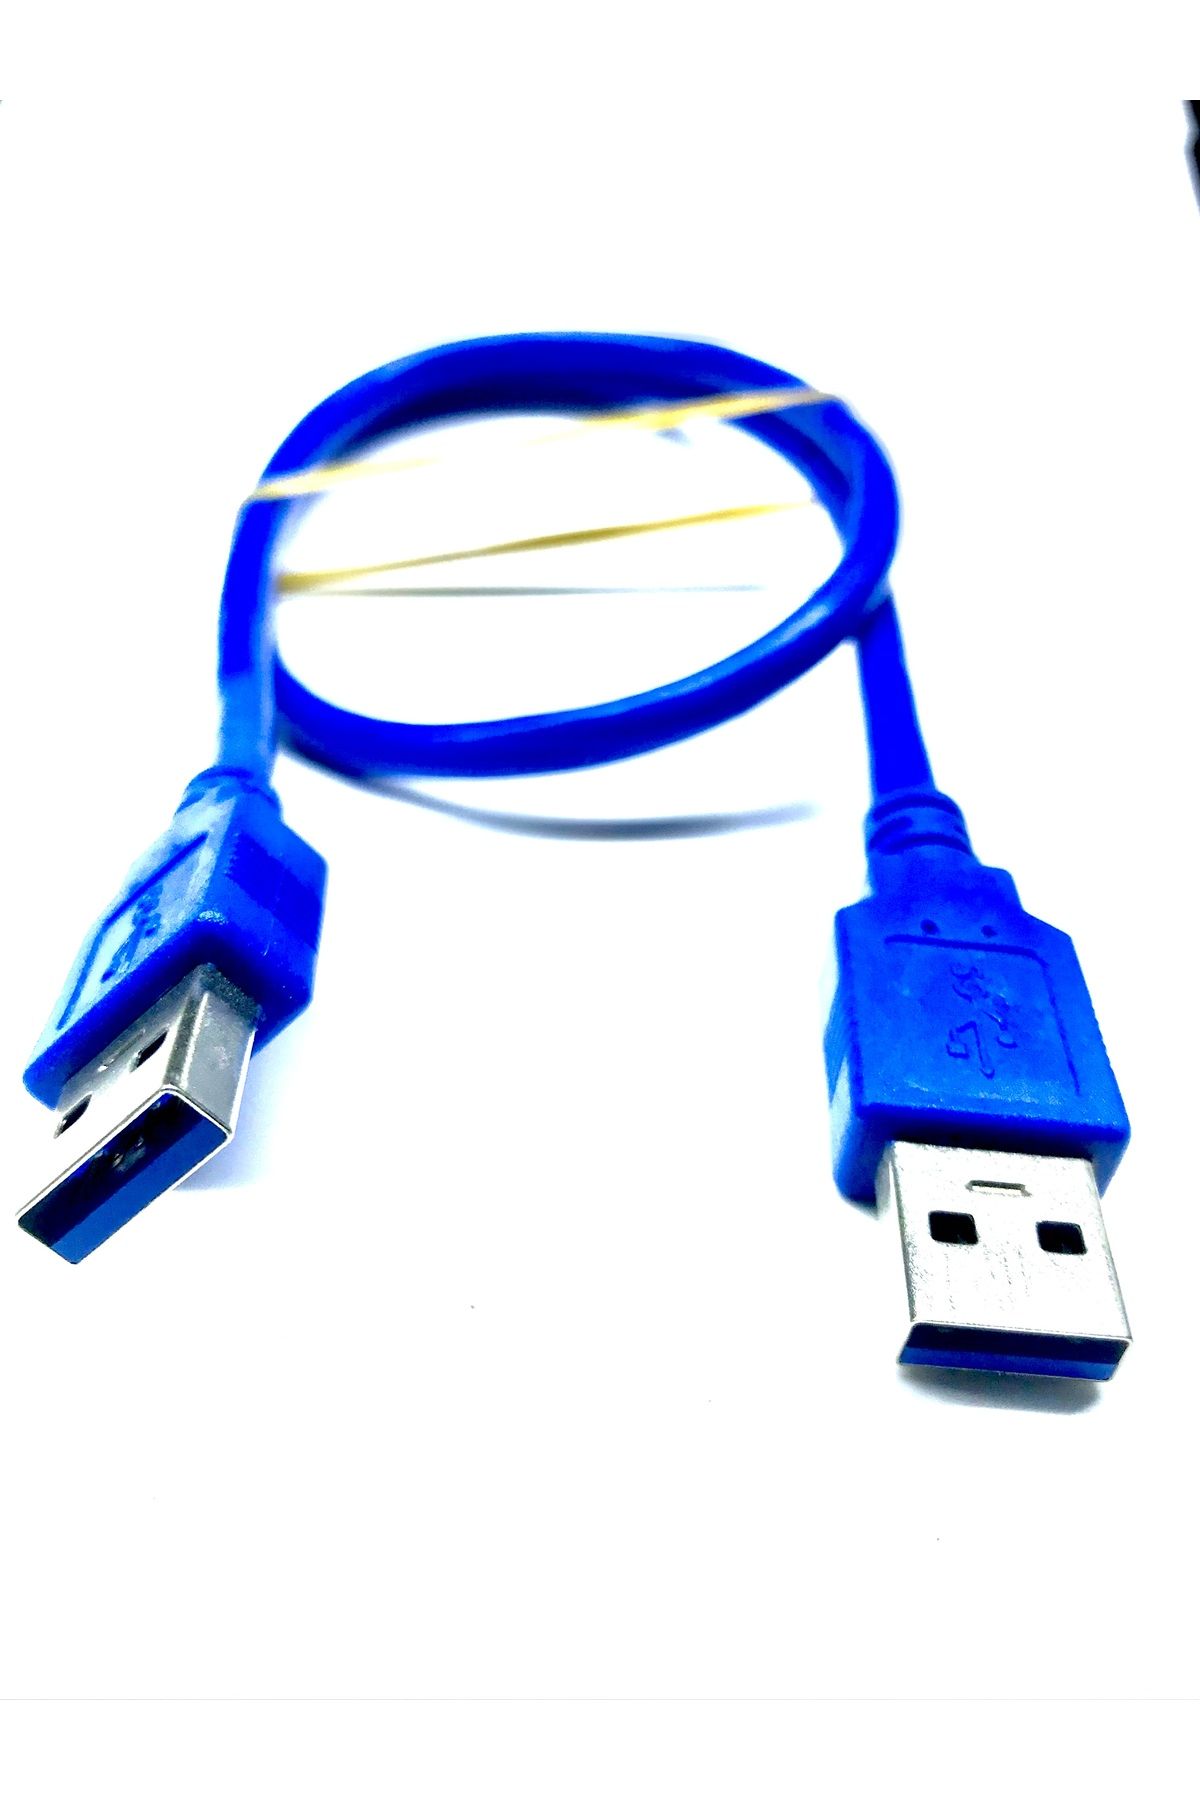 OEM İki ucu erkek USB3.0 kablo